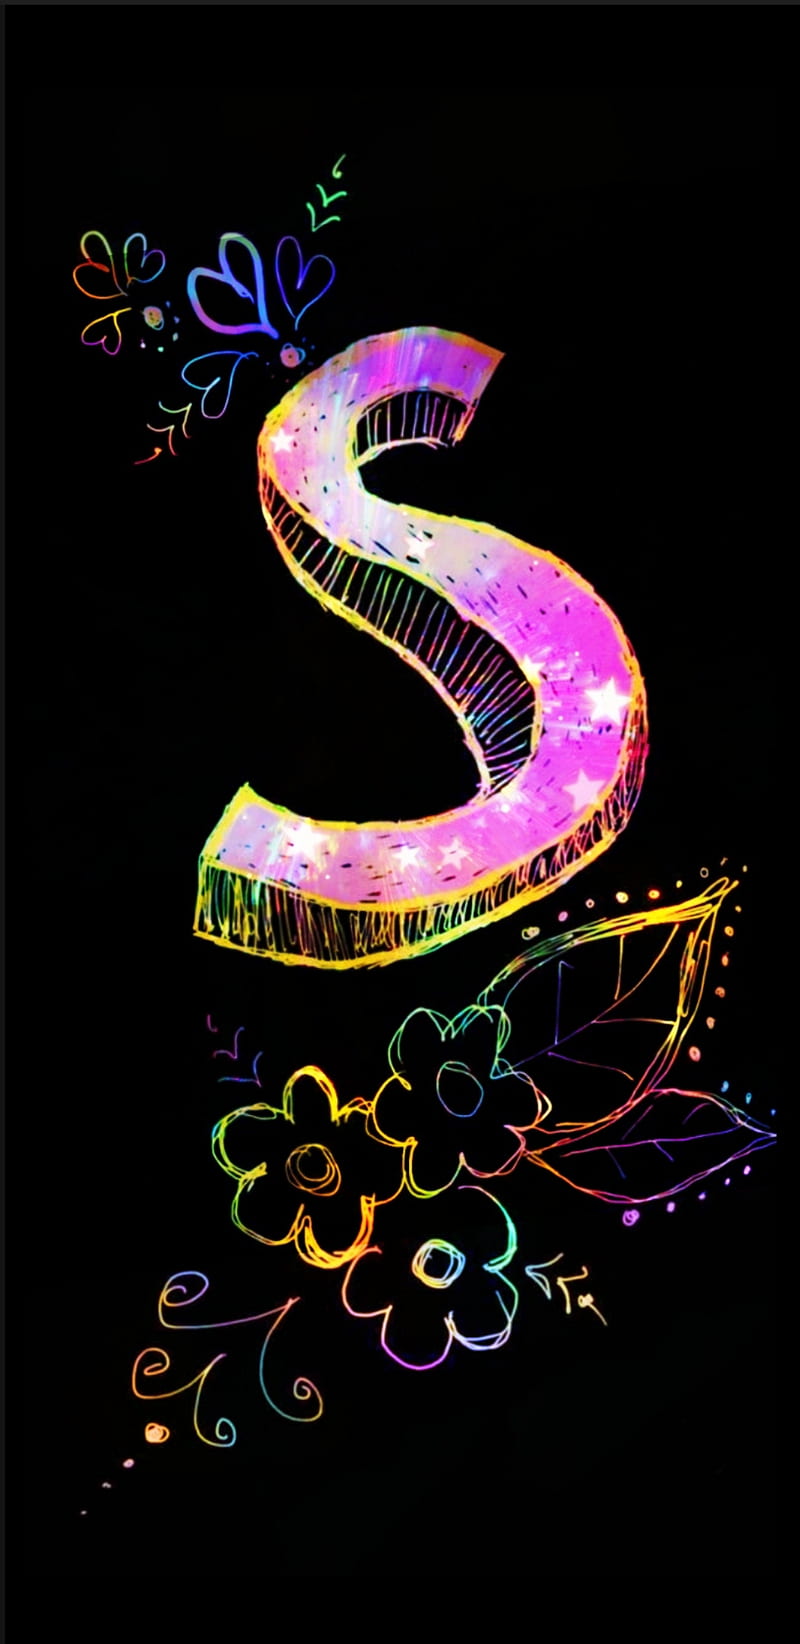 S Love, abstract, beauty, black, heart, letter s, magic, rainbow ...